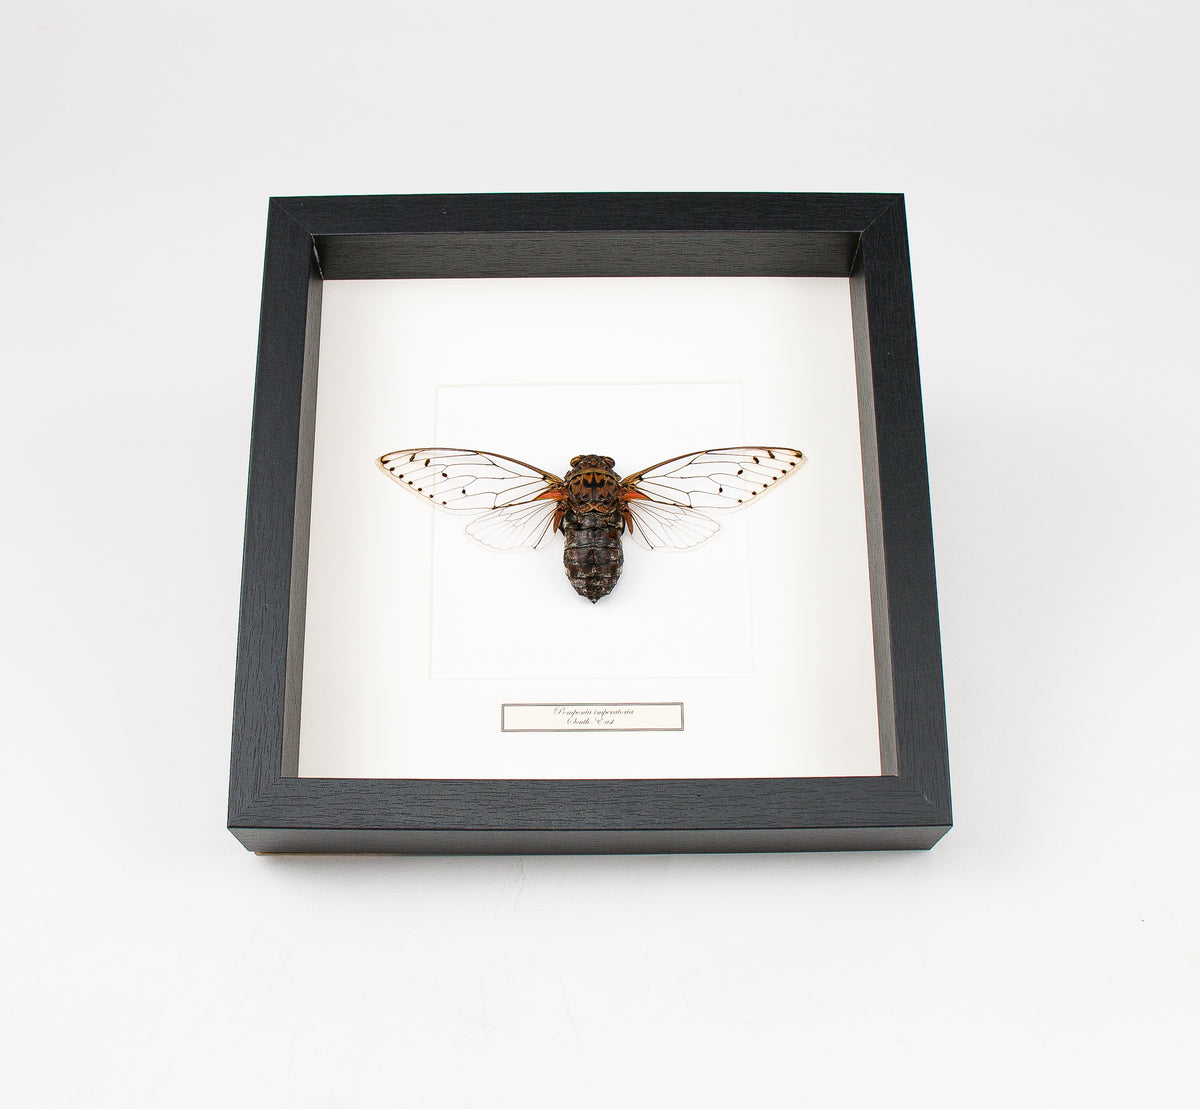 Insekt i tavla - Pomponia Imperatoria - Världens största cikada